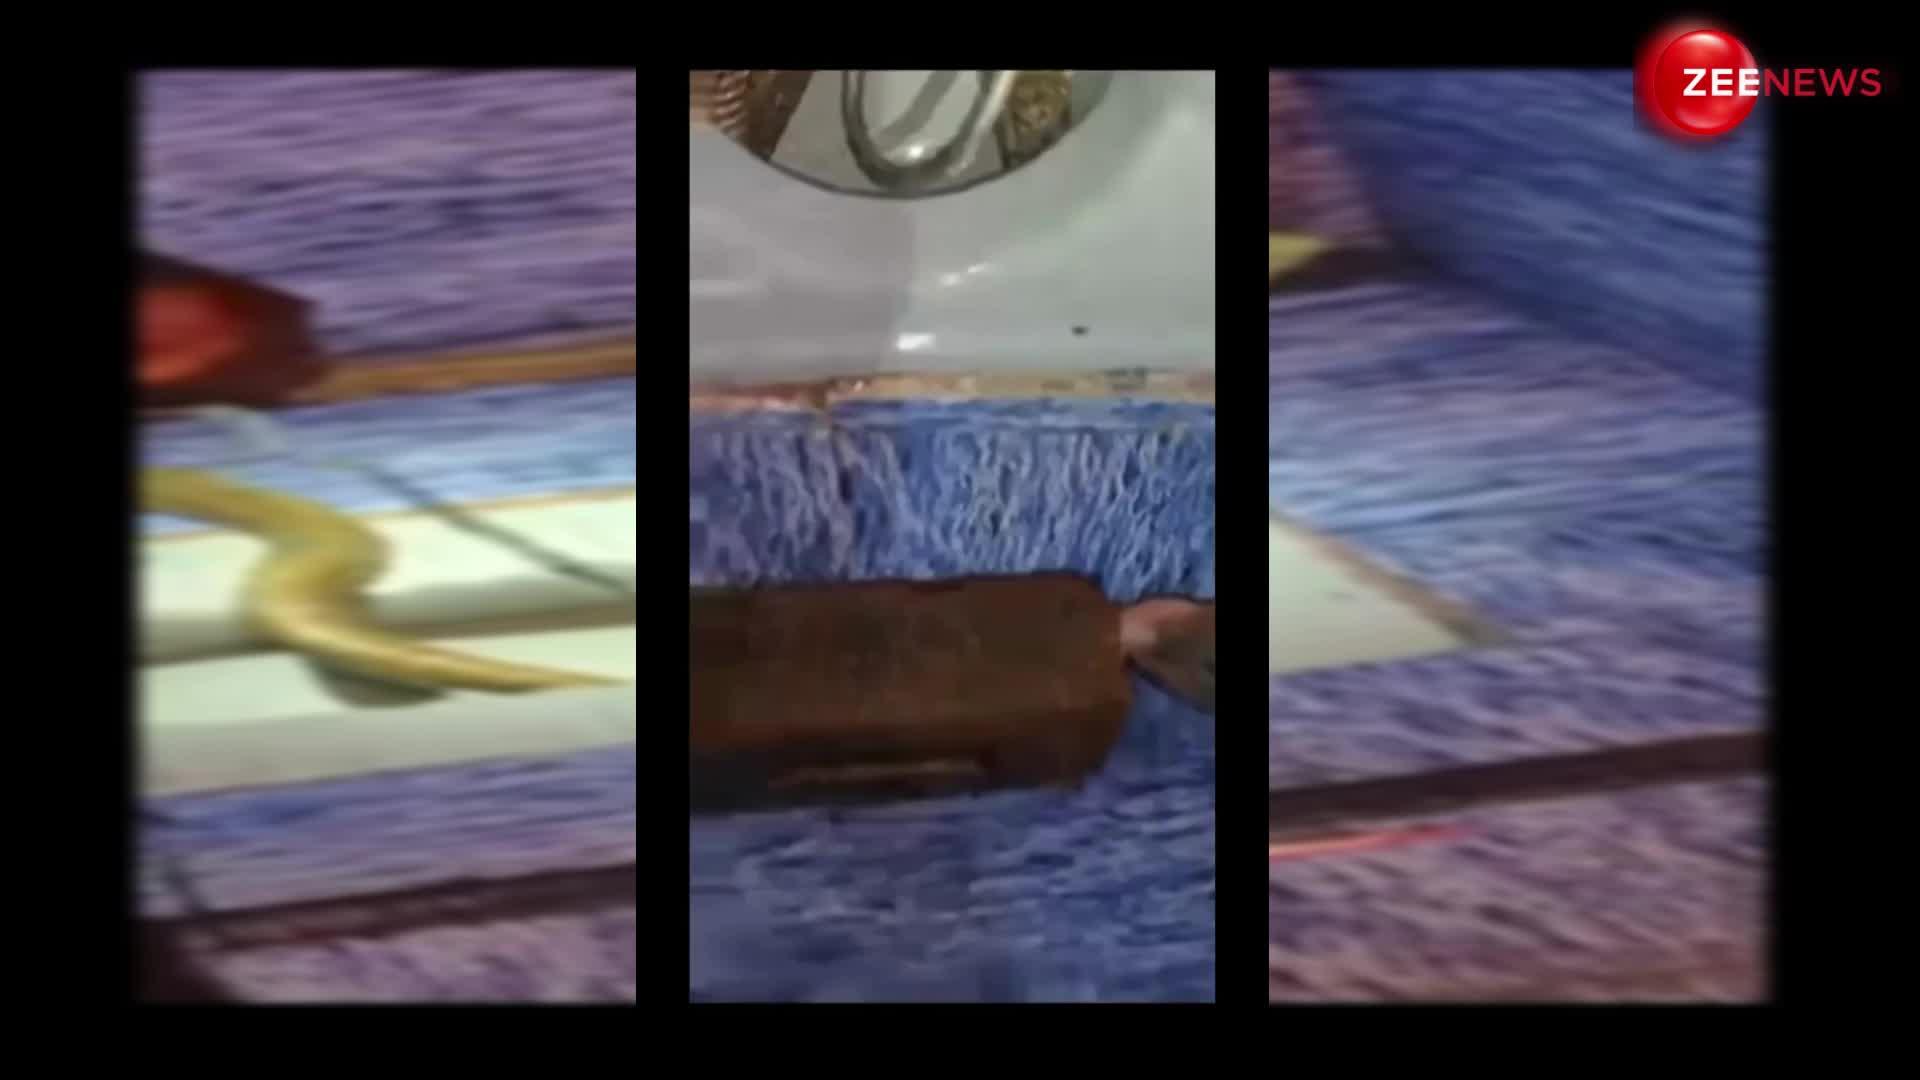 hilarious king cobra hiding in toilet seat kid got goosebumps